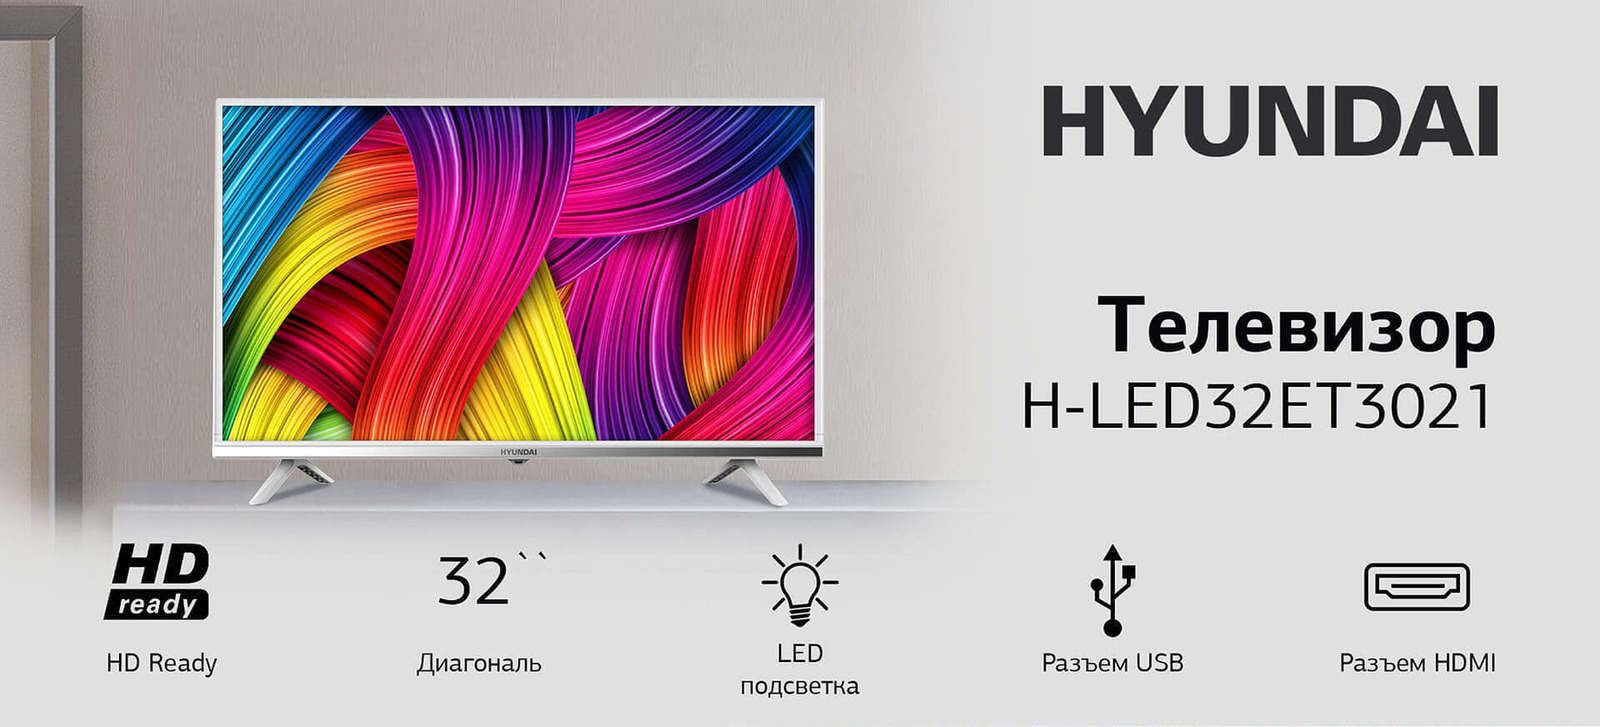 Телевизор Hyundai H-LED32ET3021